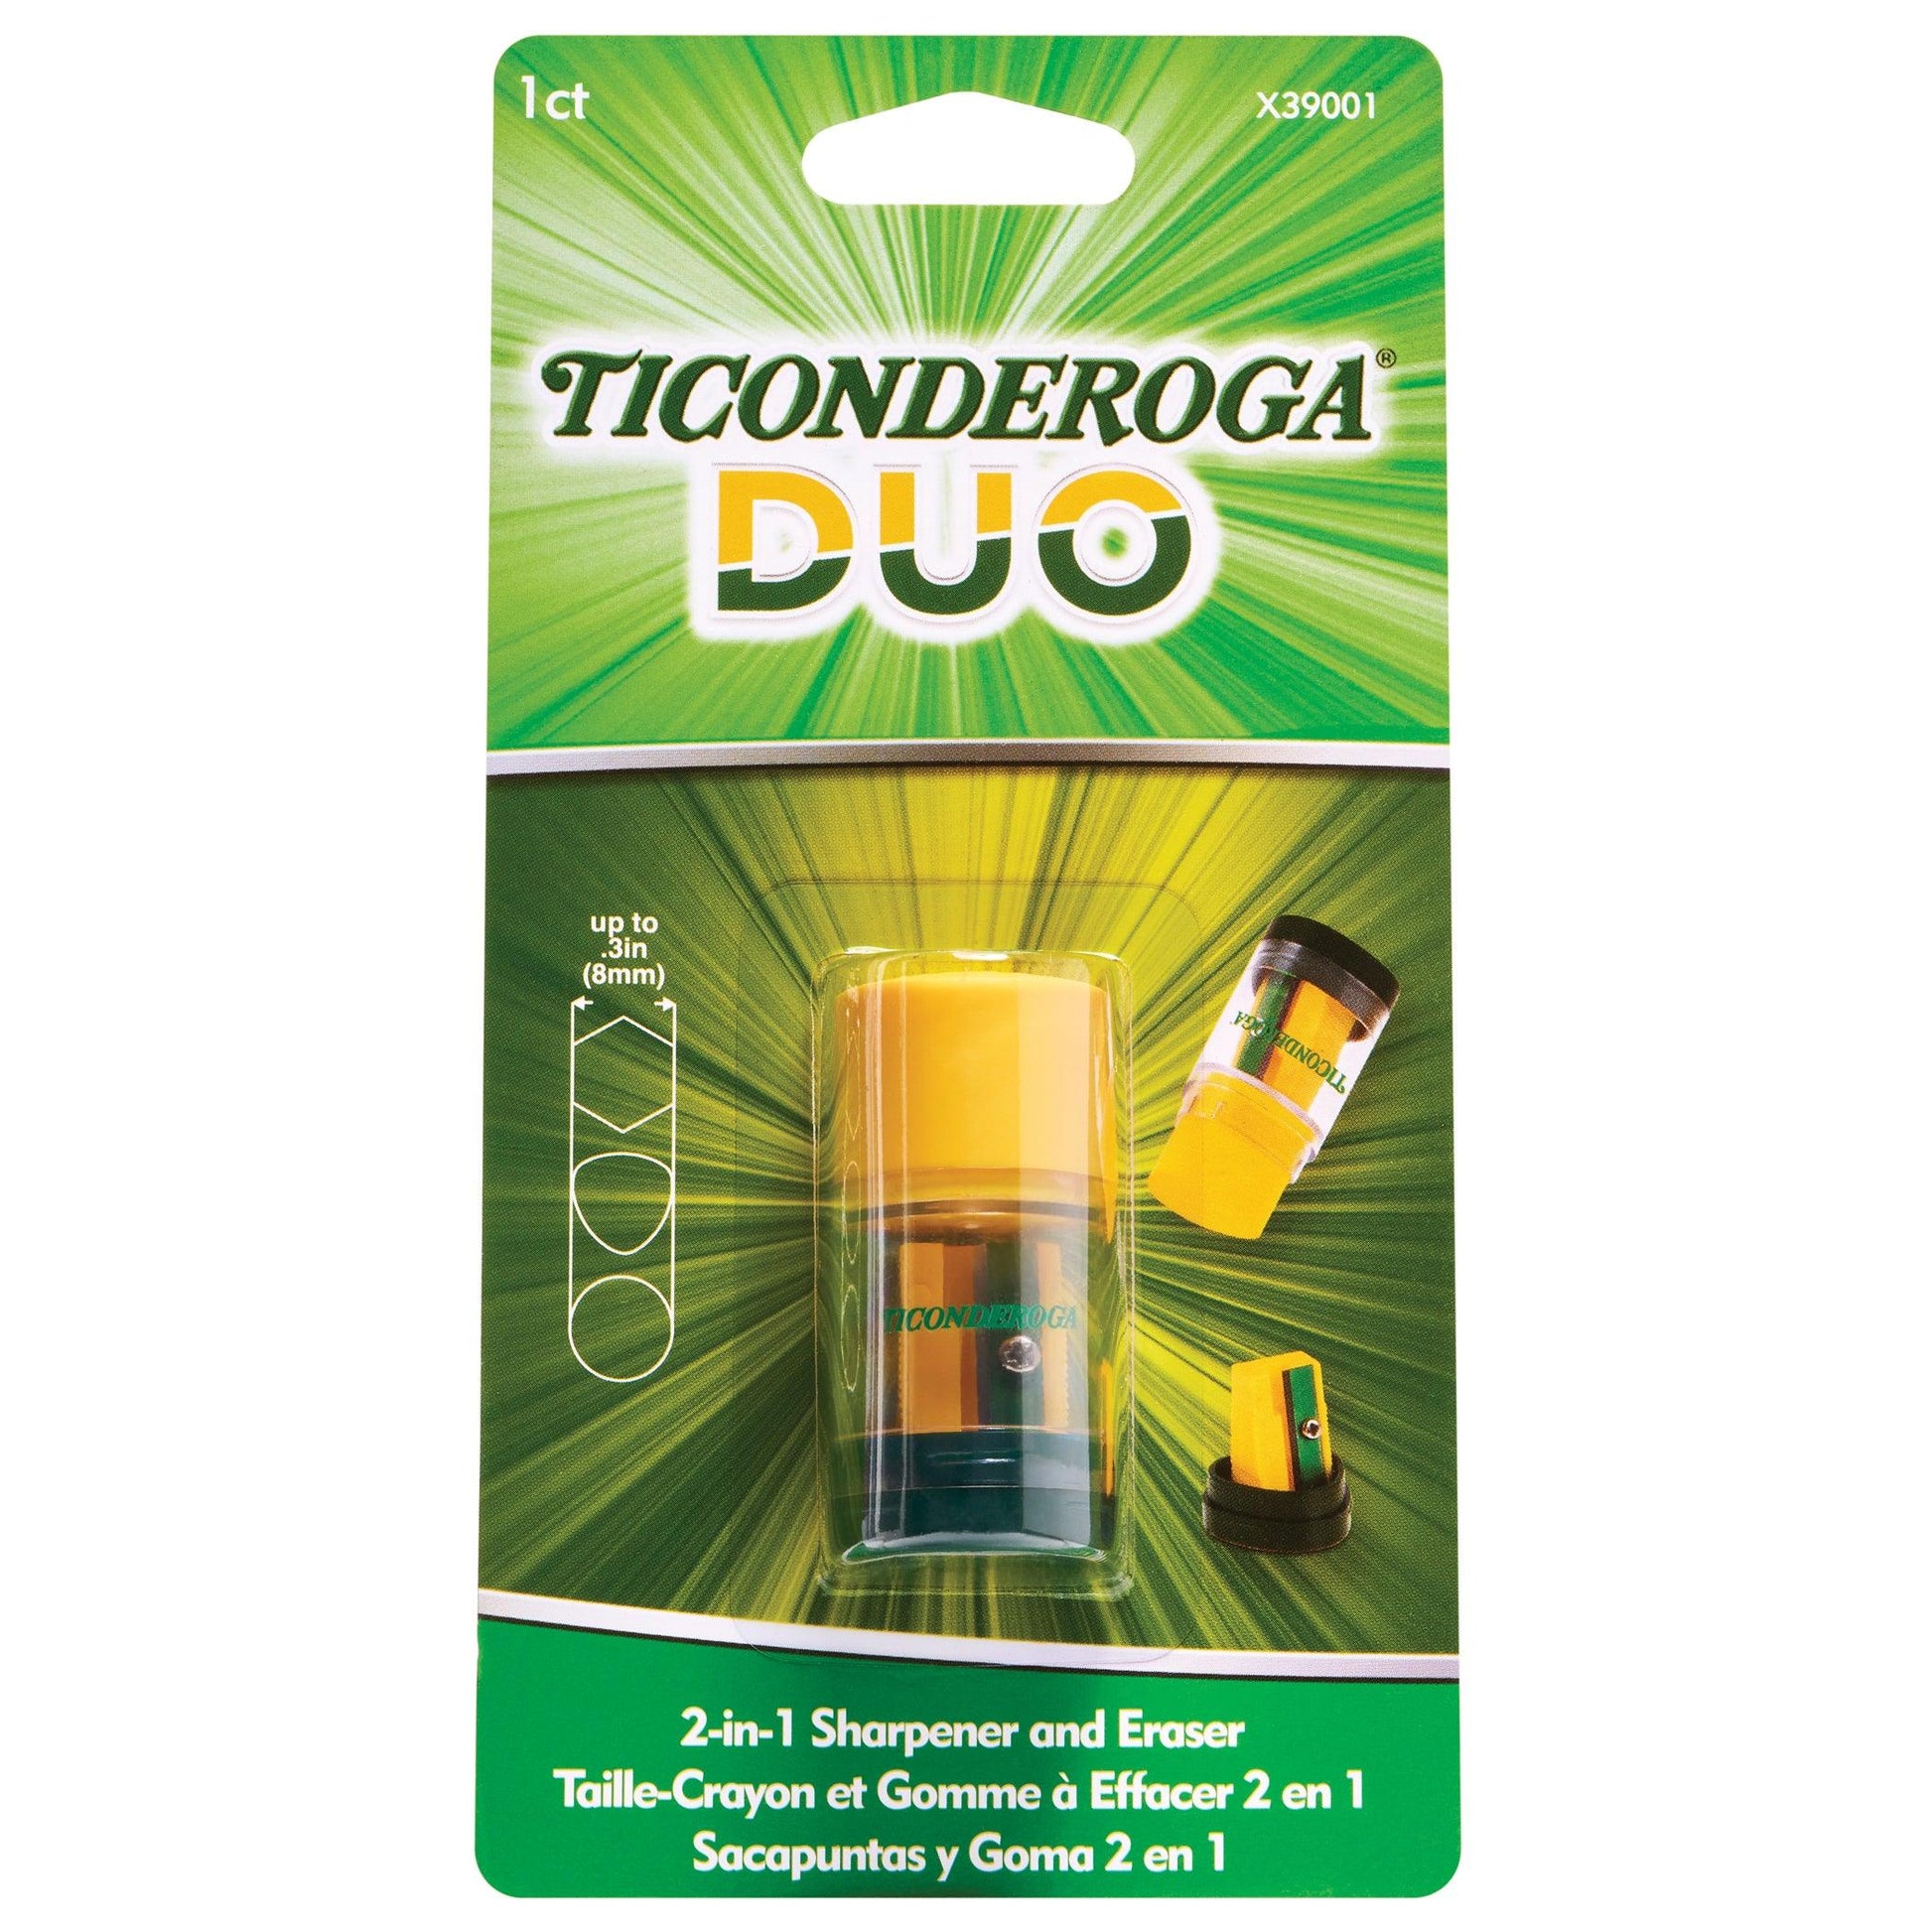 DUO Sharpener/Eraser, Green and Yellow, Pack of 12 - Loomini